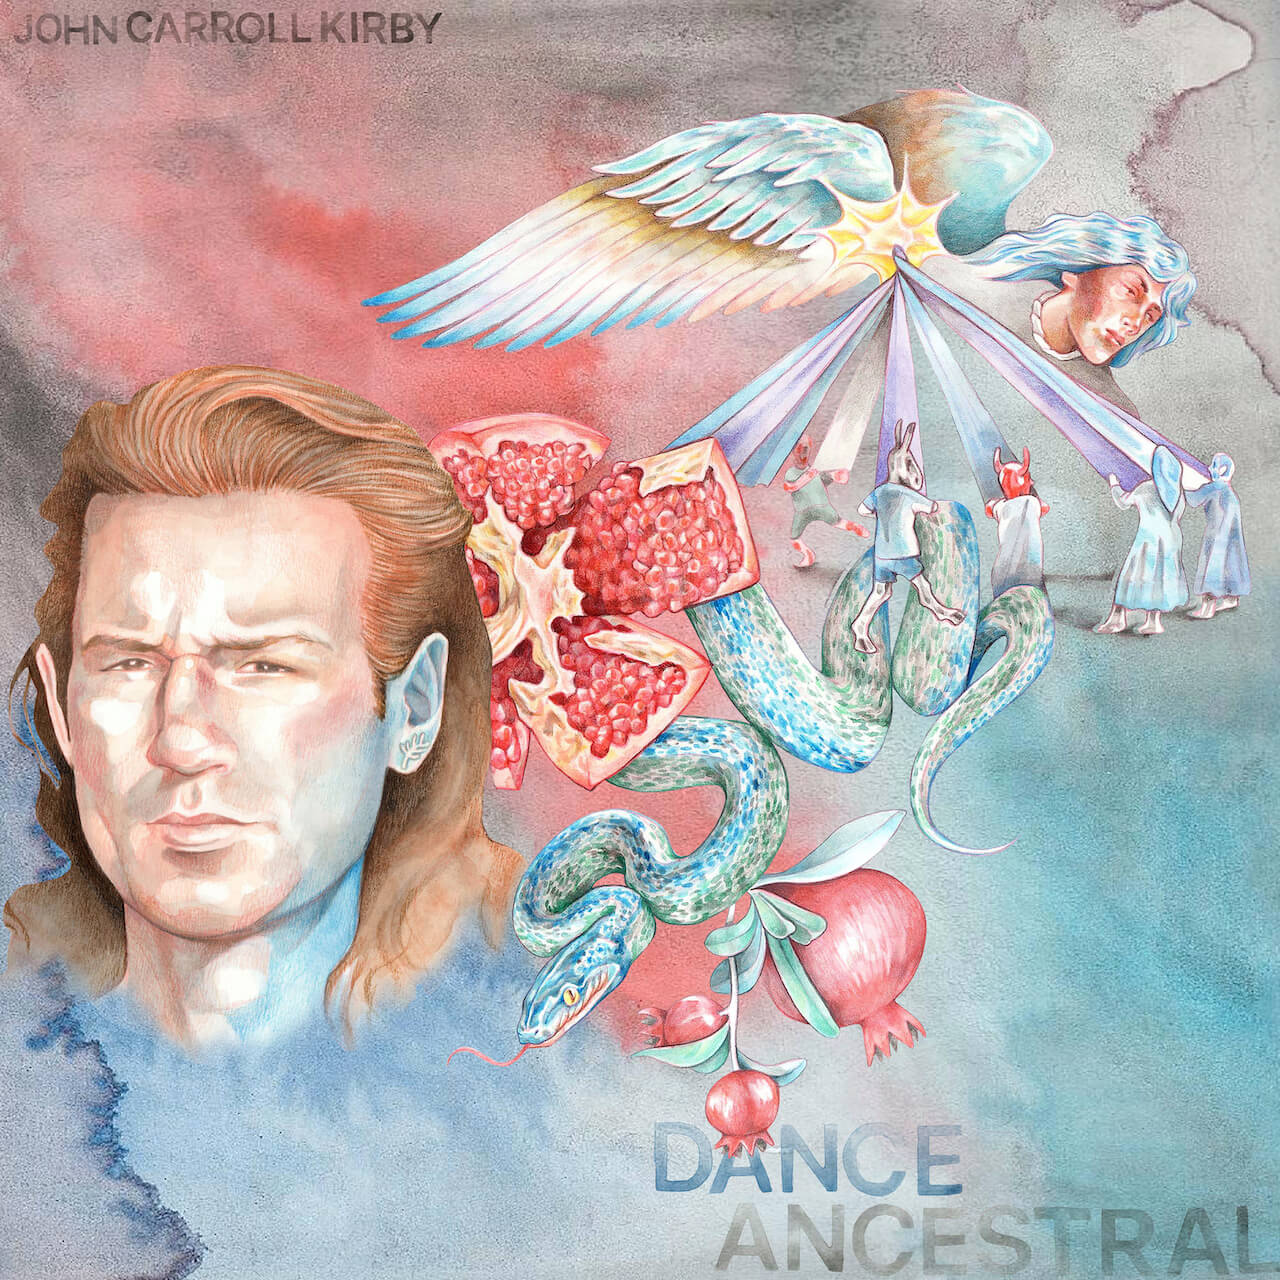 John Carroll Kirbyの最新作『Dance Ancestral』がリリース｜5月下旬には初来日公演も music220408-johncarrolkirby-2